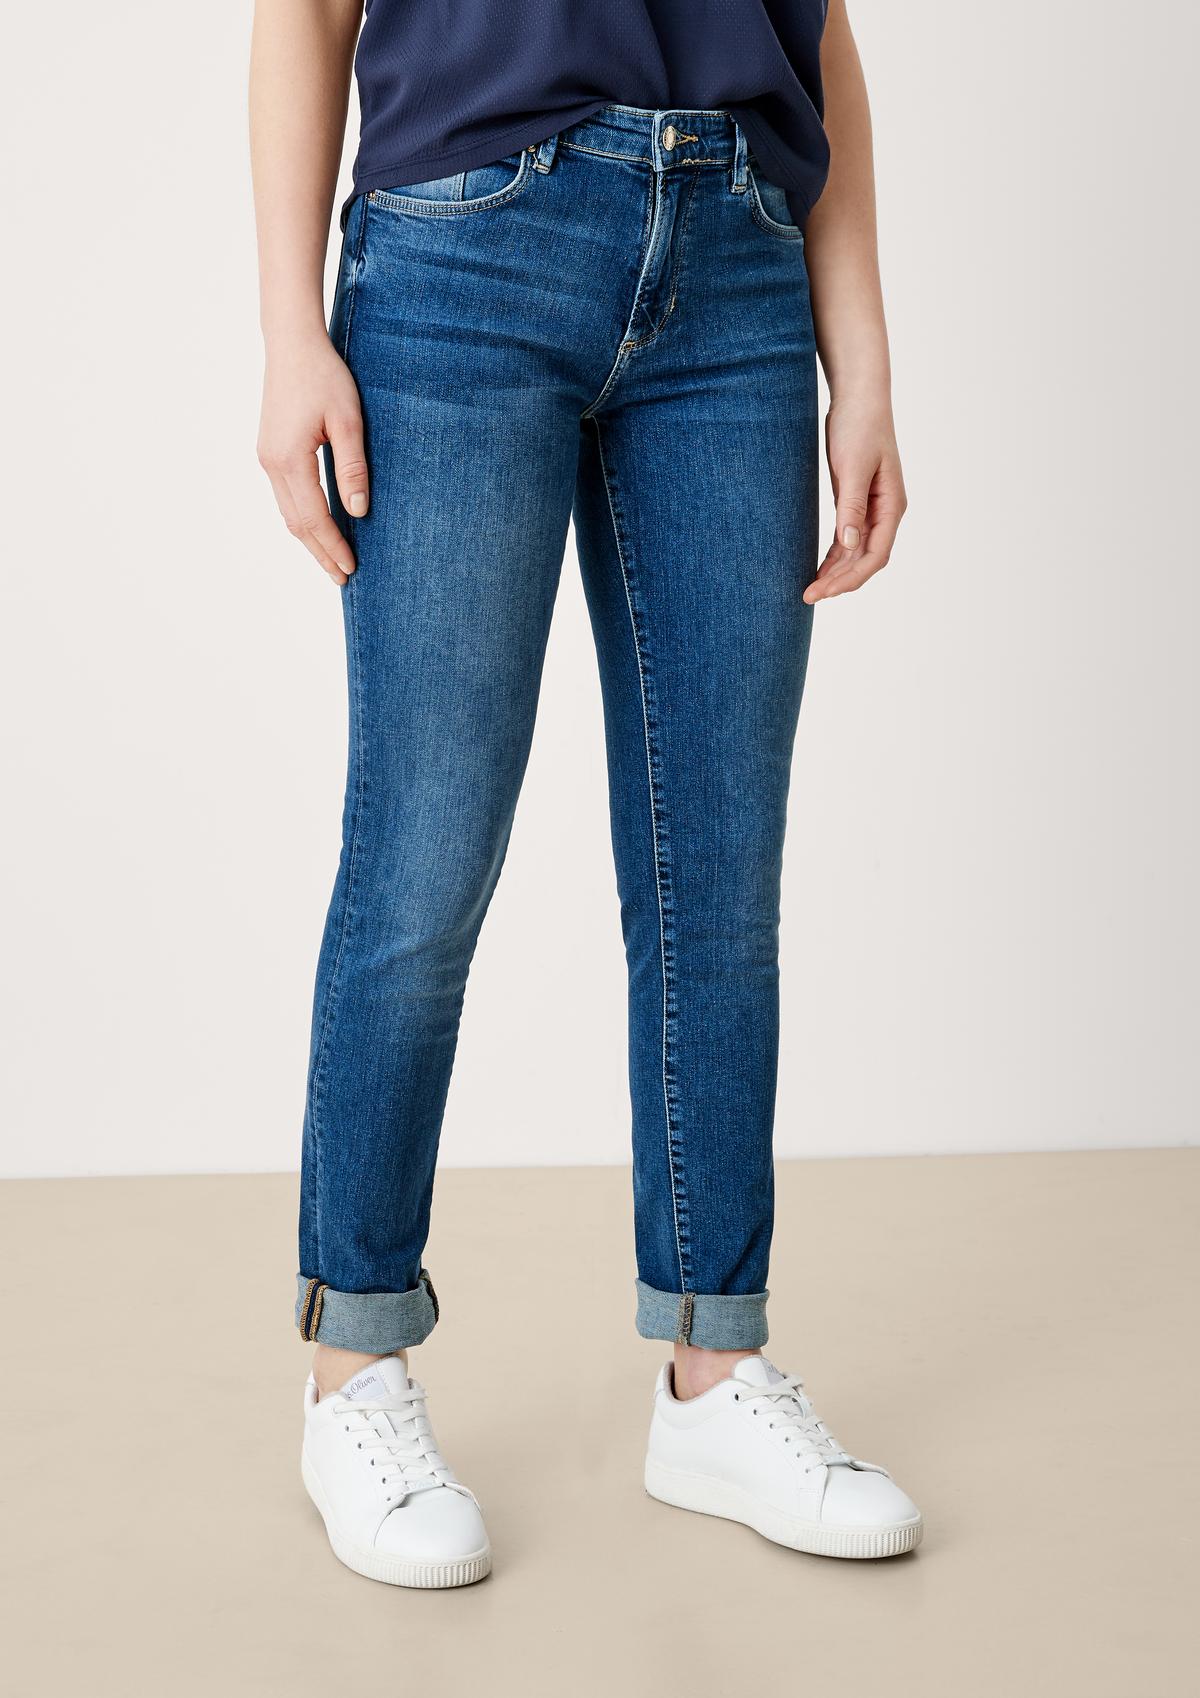 Jeans Betsy / Slim Fit / Mid Rise / Slim Leg 